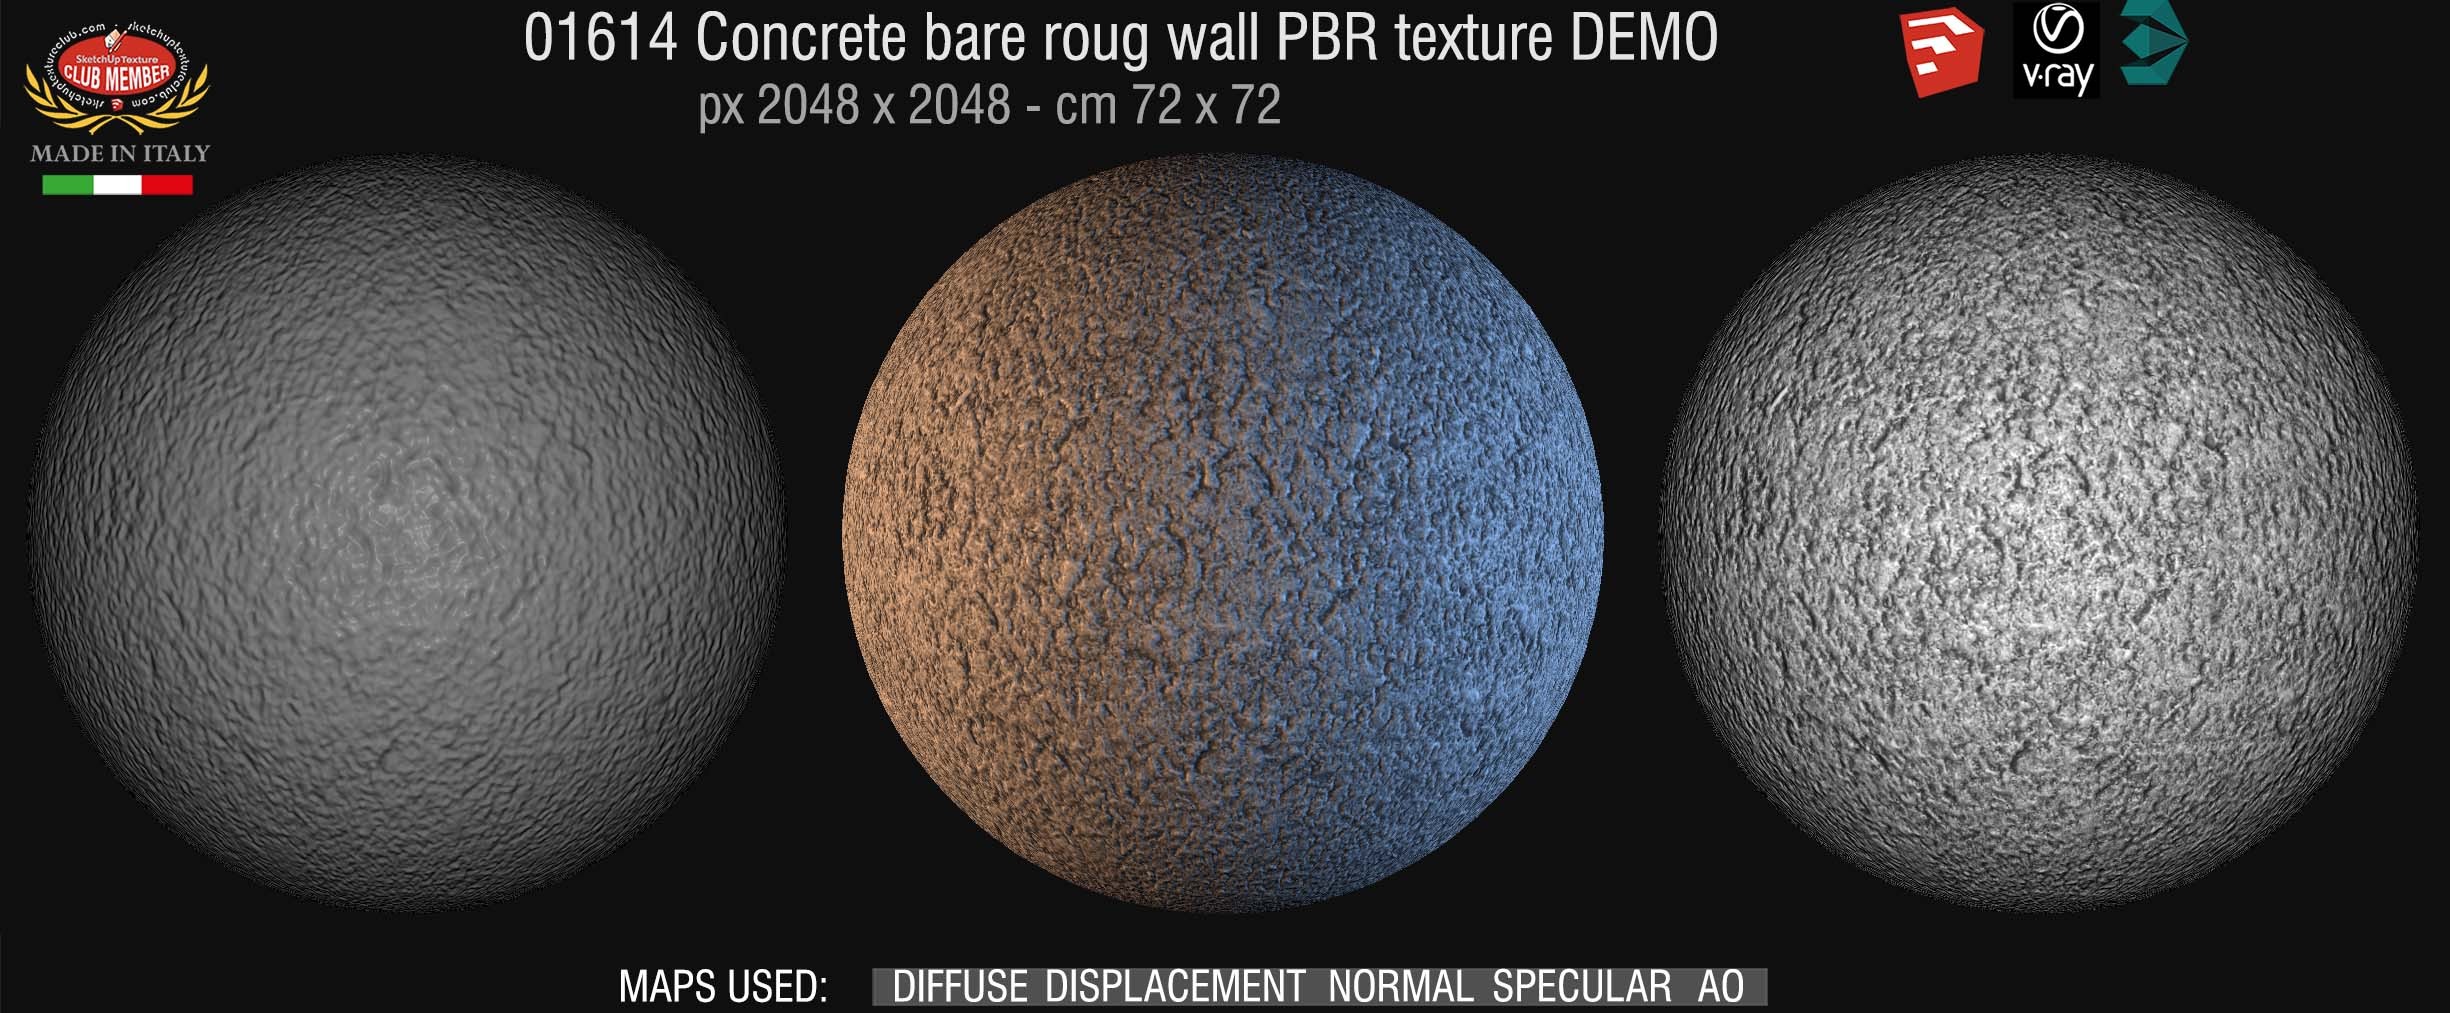 01614 Concrete bare rough wall PBR texture seamless DEMO